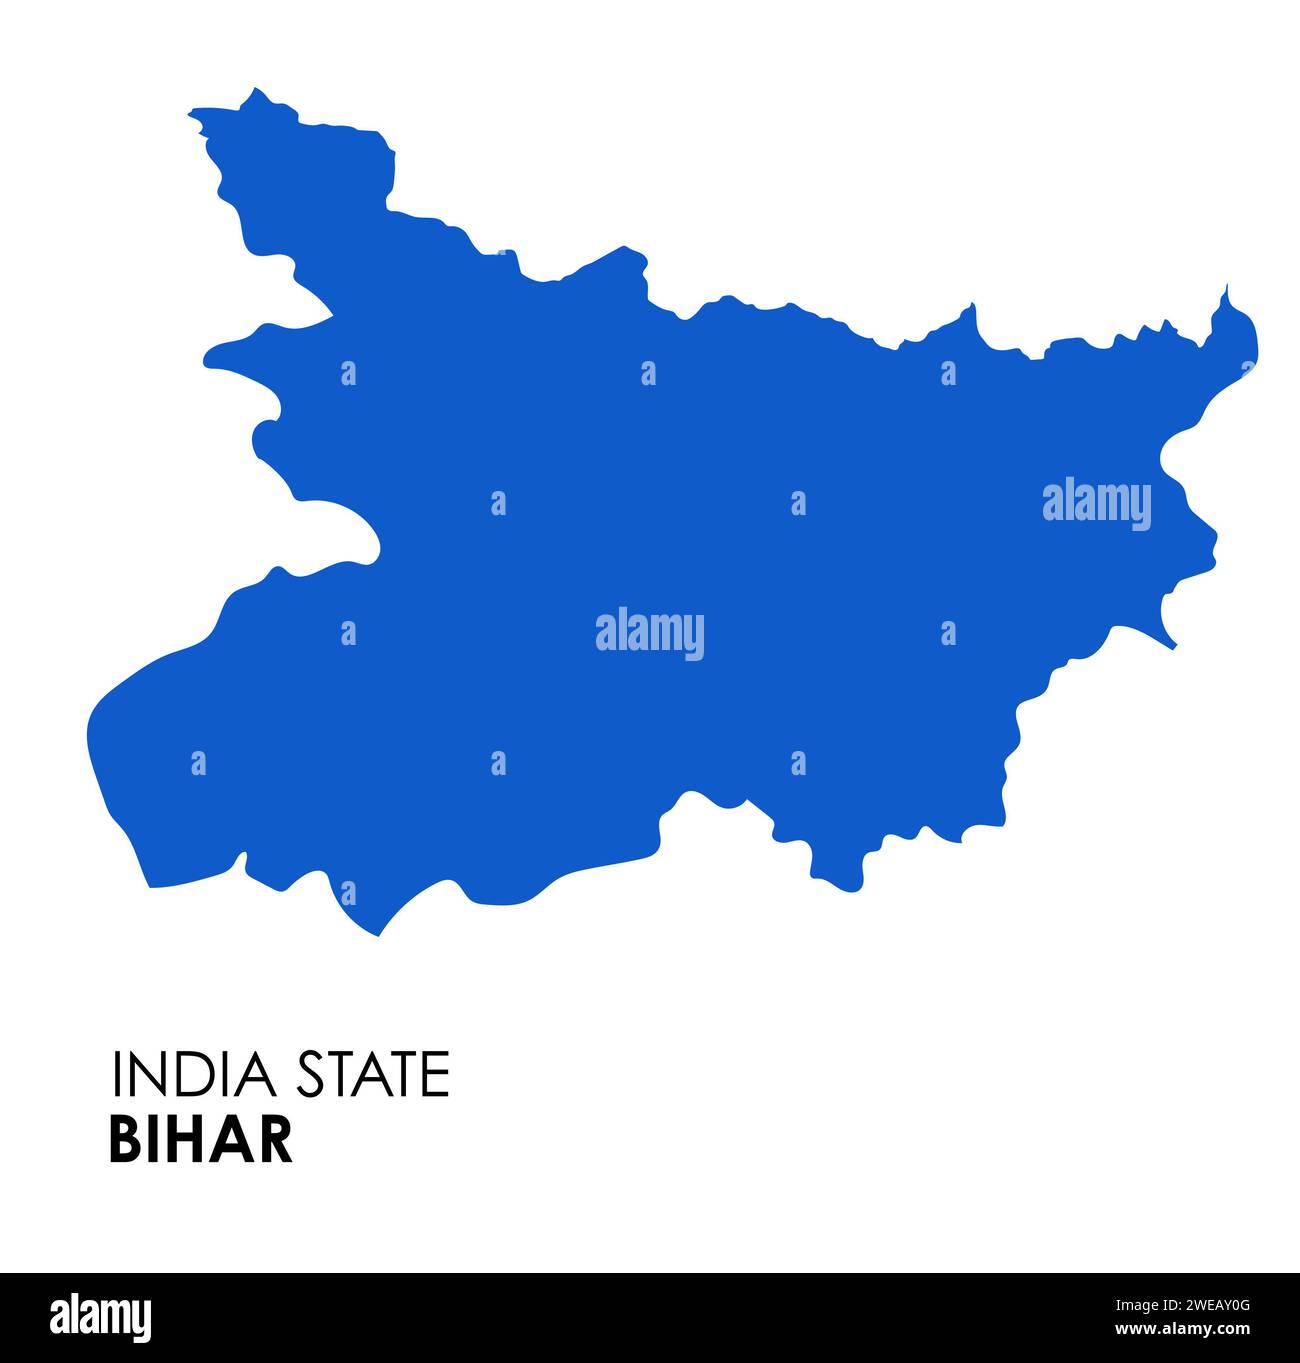 Bihar map of Indian state. Bihar map vector illustration. Bihar vector map on white background. Stock Photo